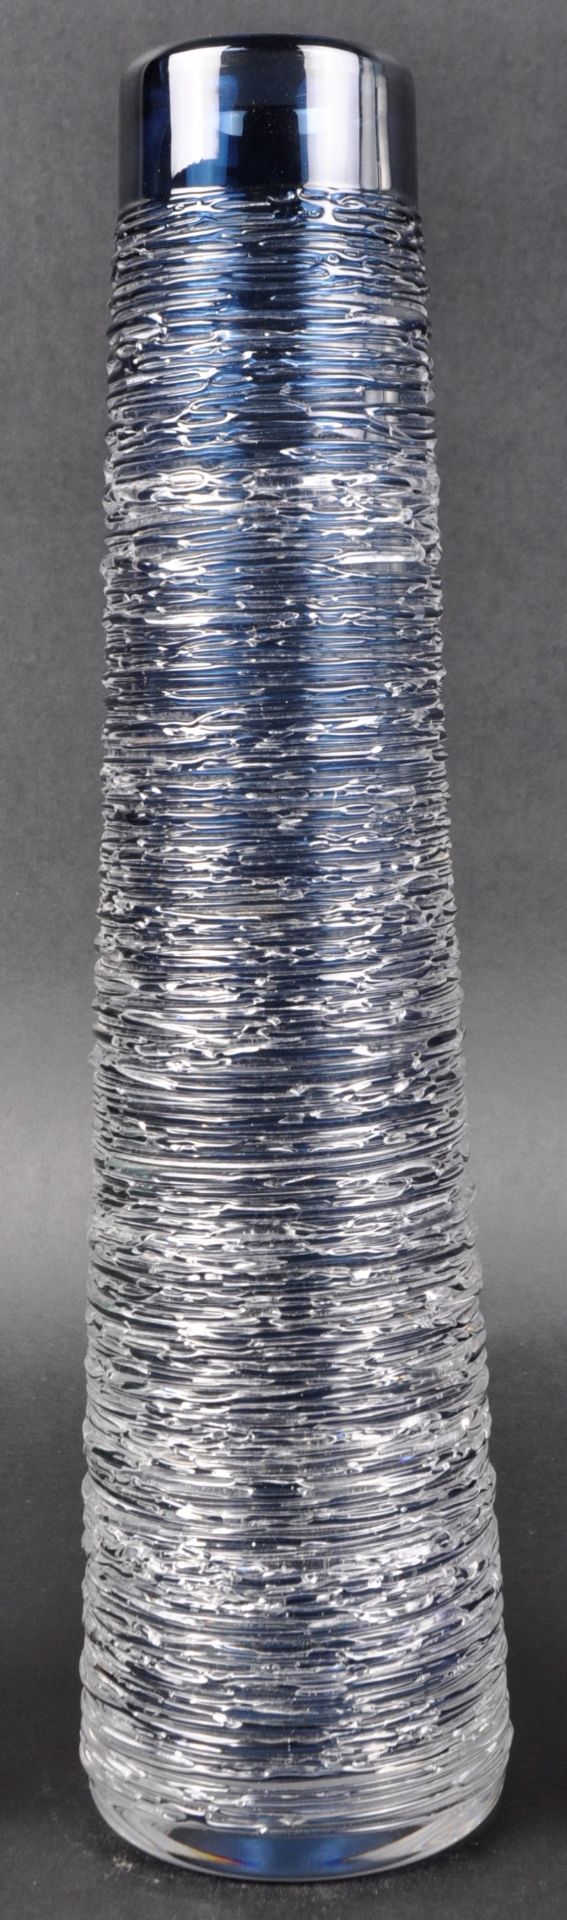 BENGT EDENFALK FOR SKRUF - A TRIO OF SPUN STUDIO ART GLASS VASES - Image 4 of 9